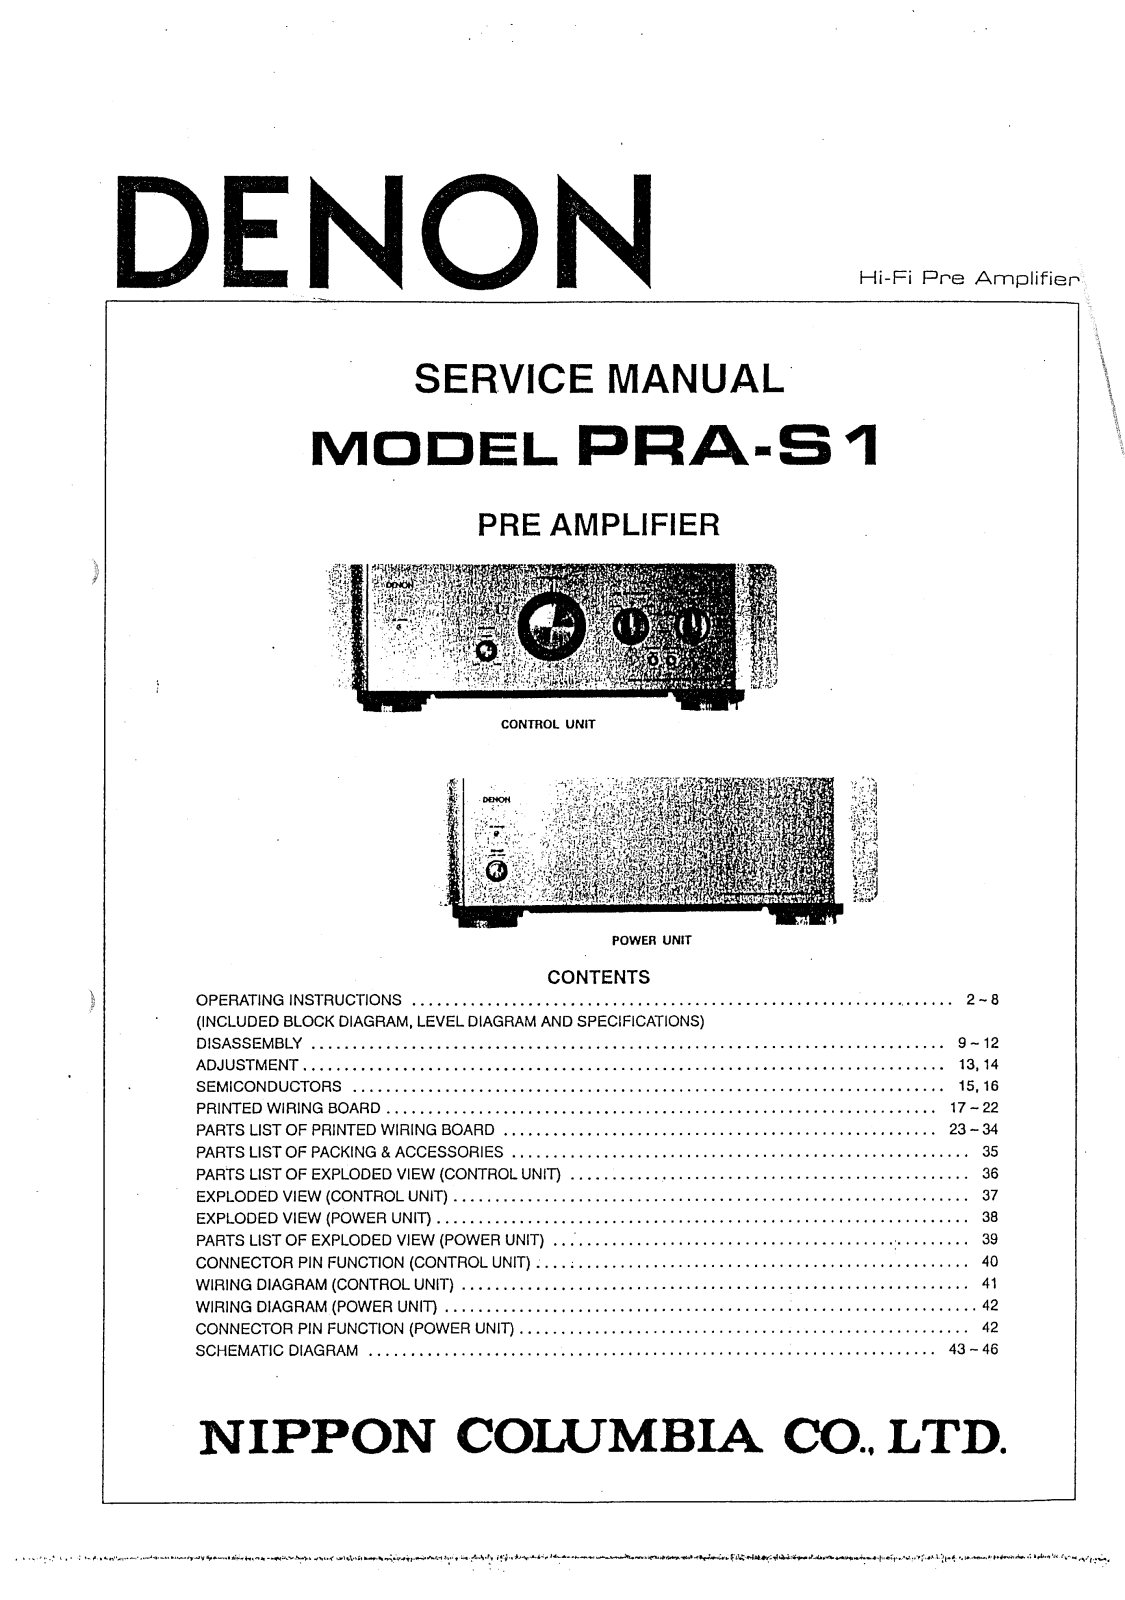 Denon PRA-S1 Service Manual